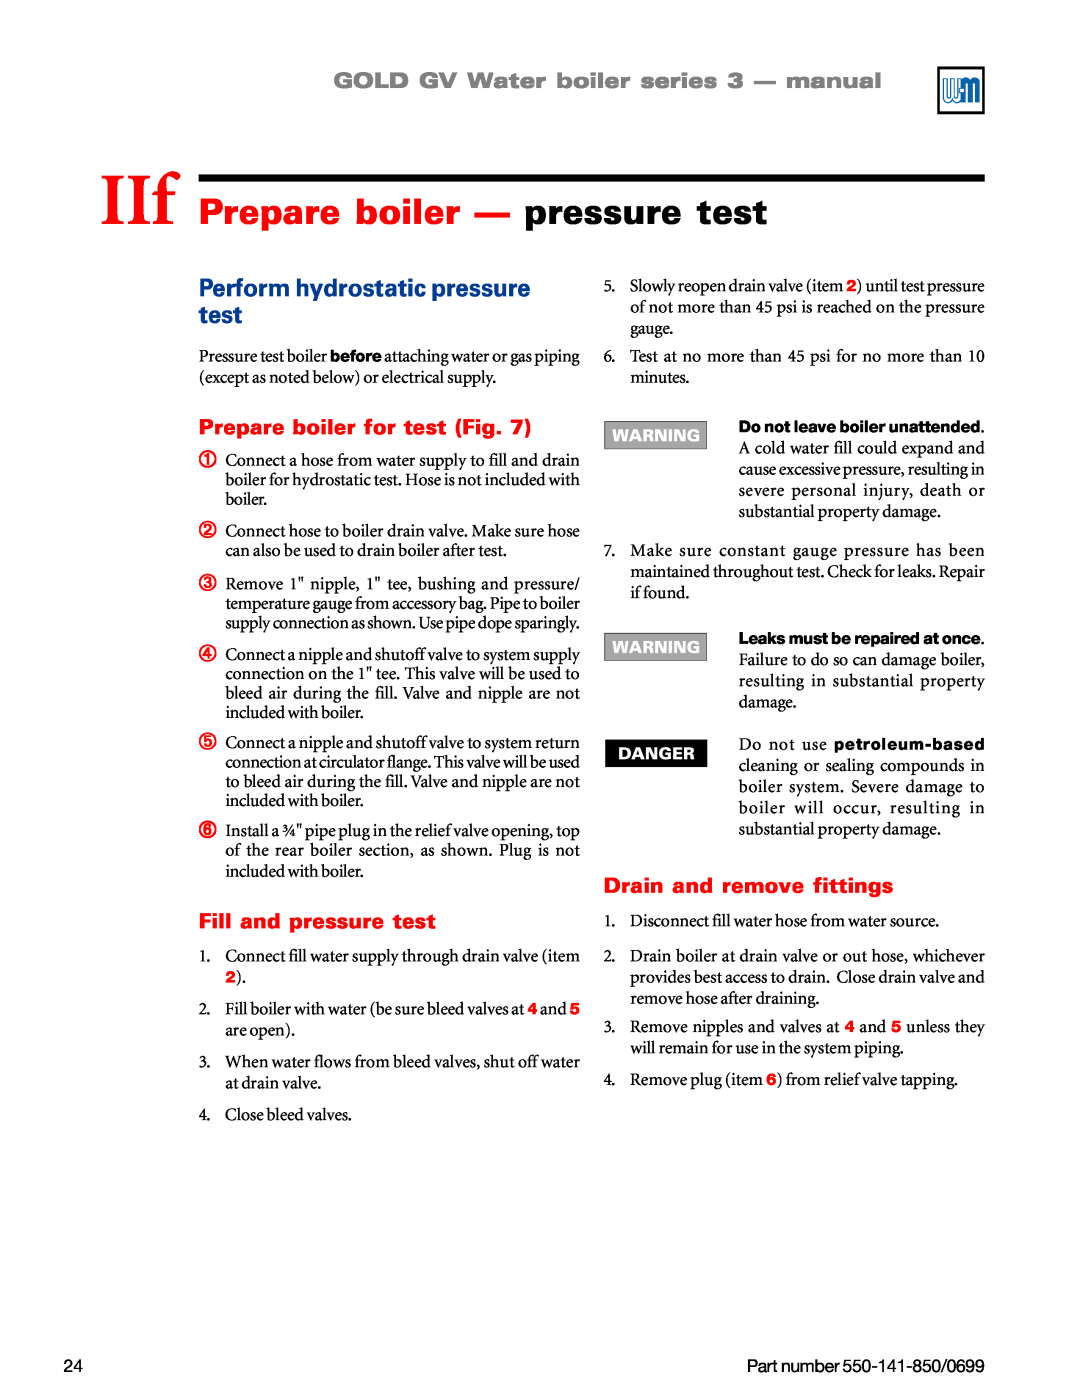 Weil-McLain GOLD DV WATER BOILER, 550-141-850/0599 IIf Prepare boiler — pressure test, Perform hydrostatic pressure test 